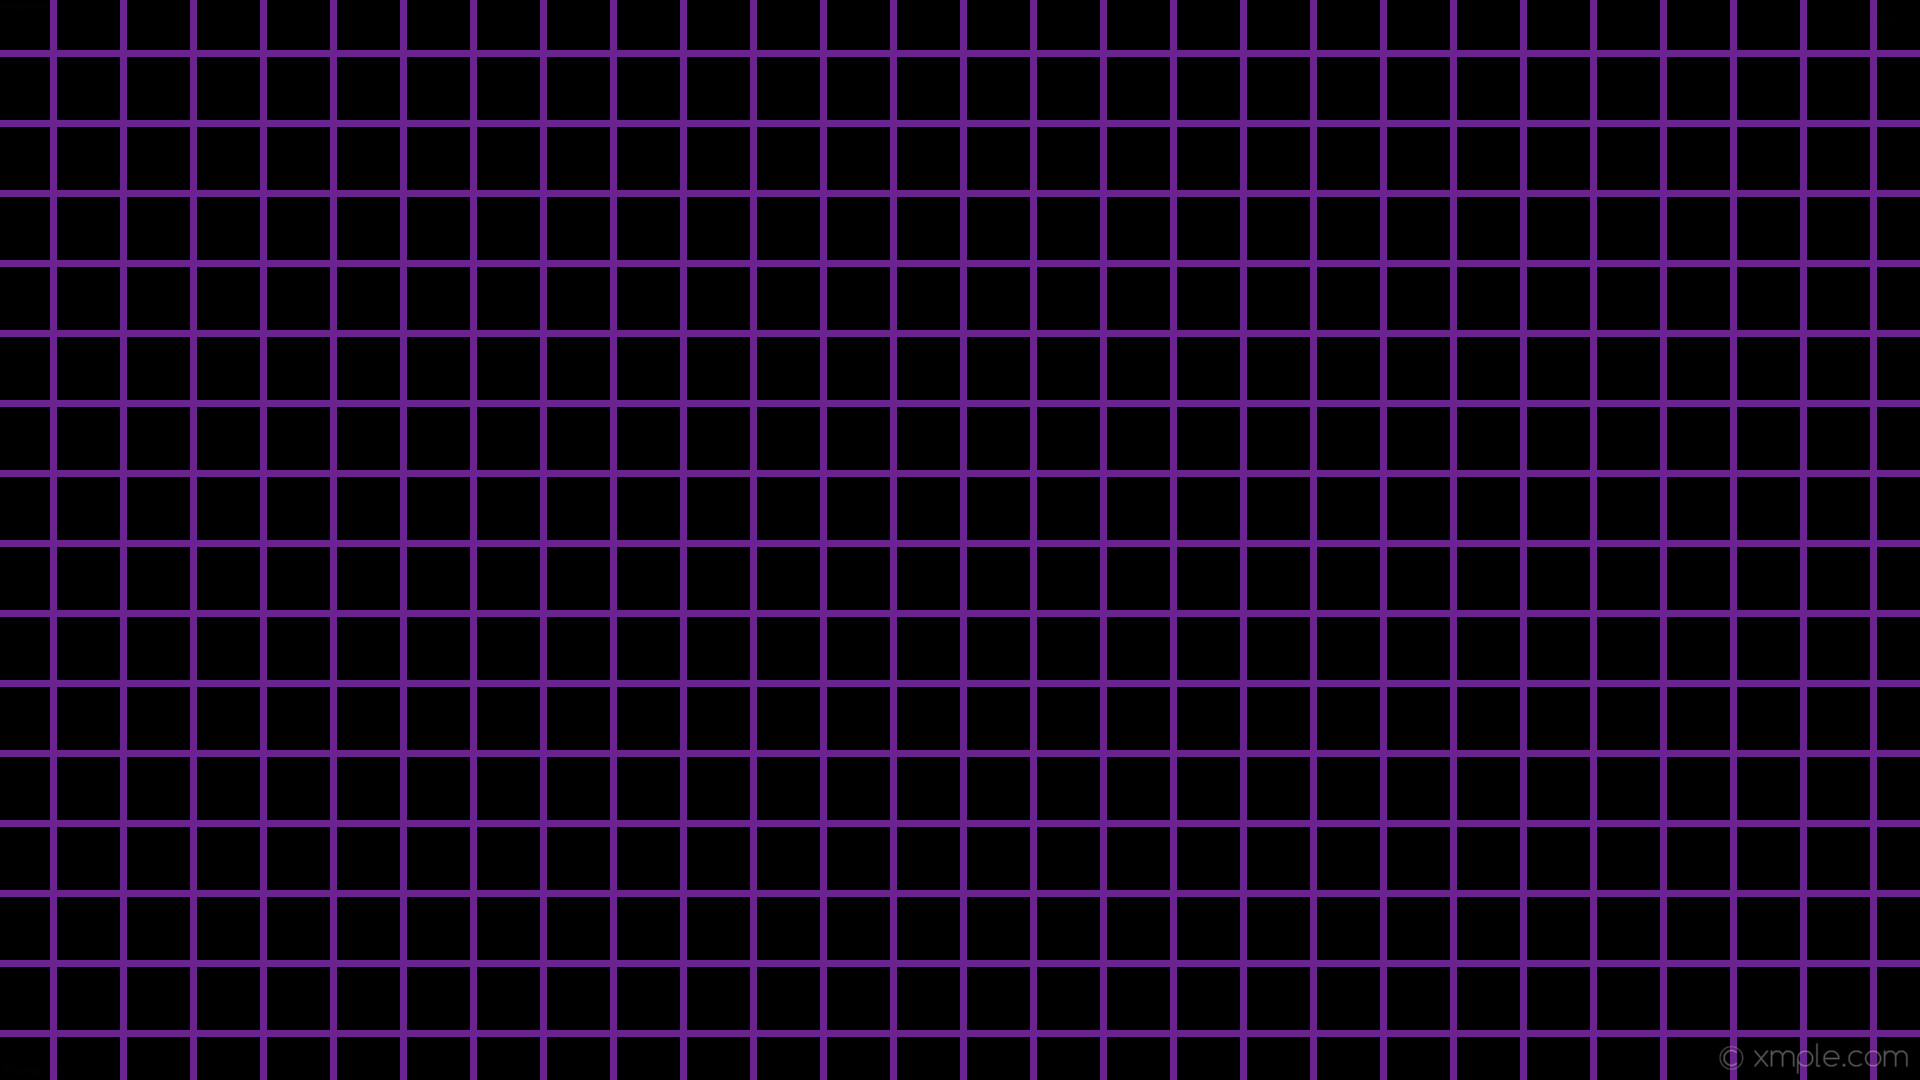 1920x1080 wallpaper graph paper black purple grid dark orchid #000000 #9932cc 0Â° 7px  70px